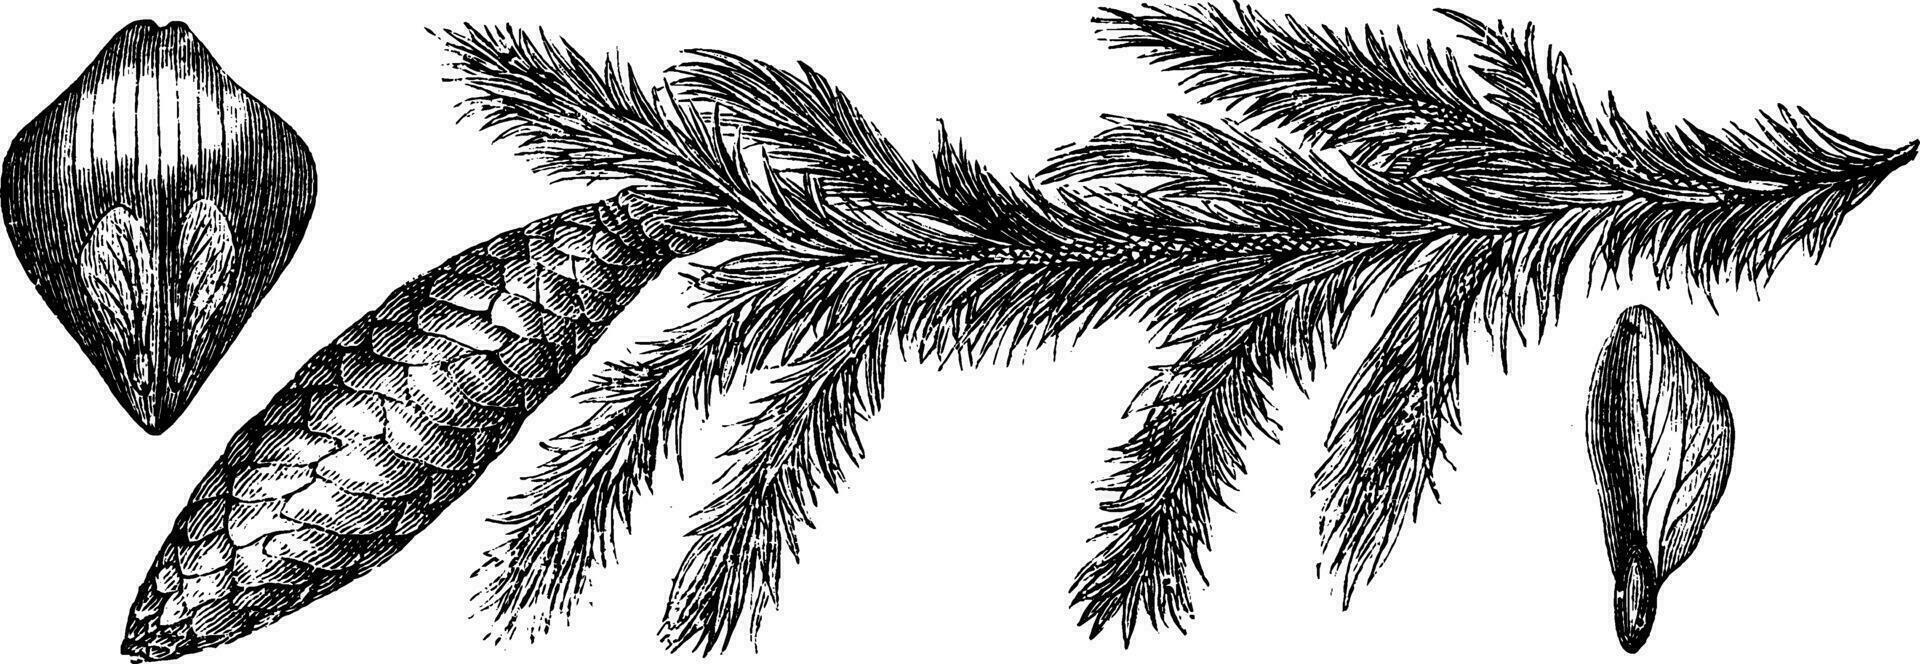 Picea Excelsa vintage illustration. vector